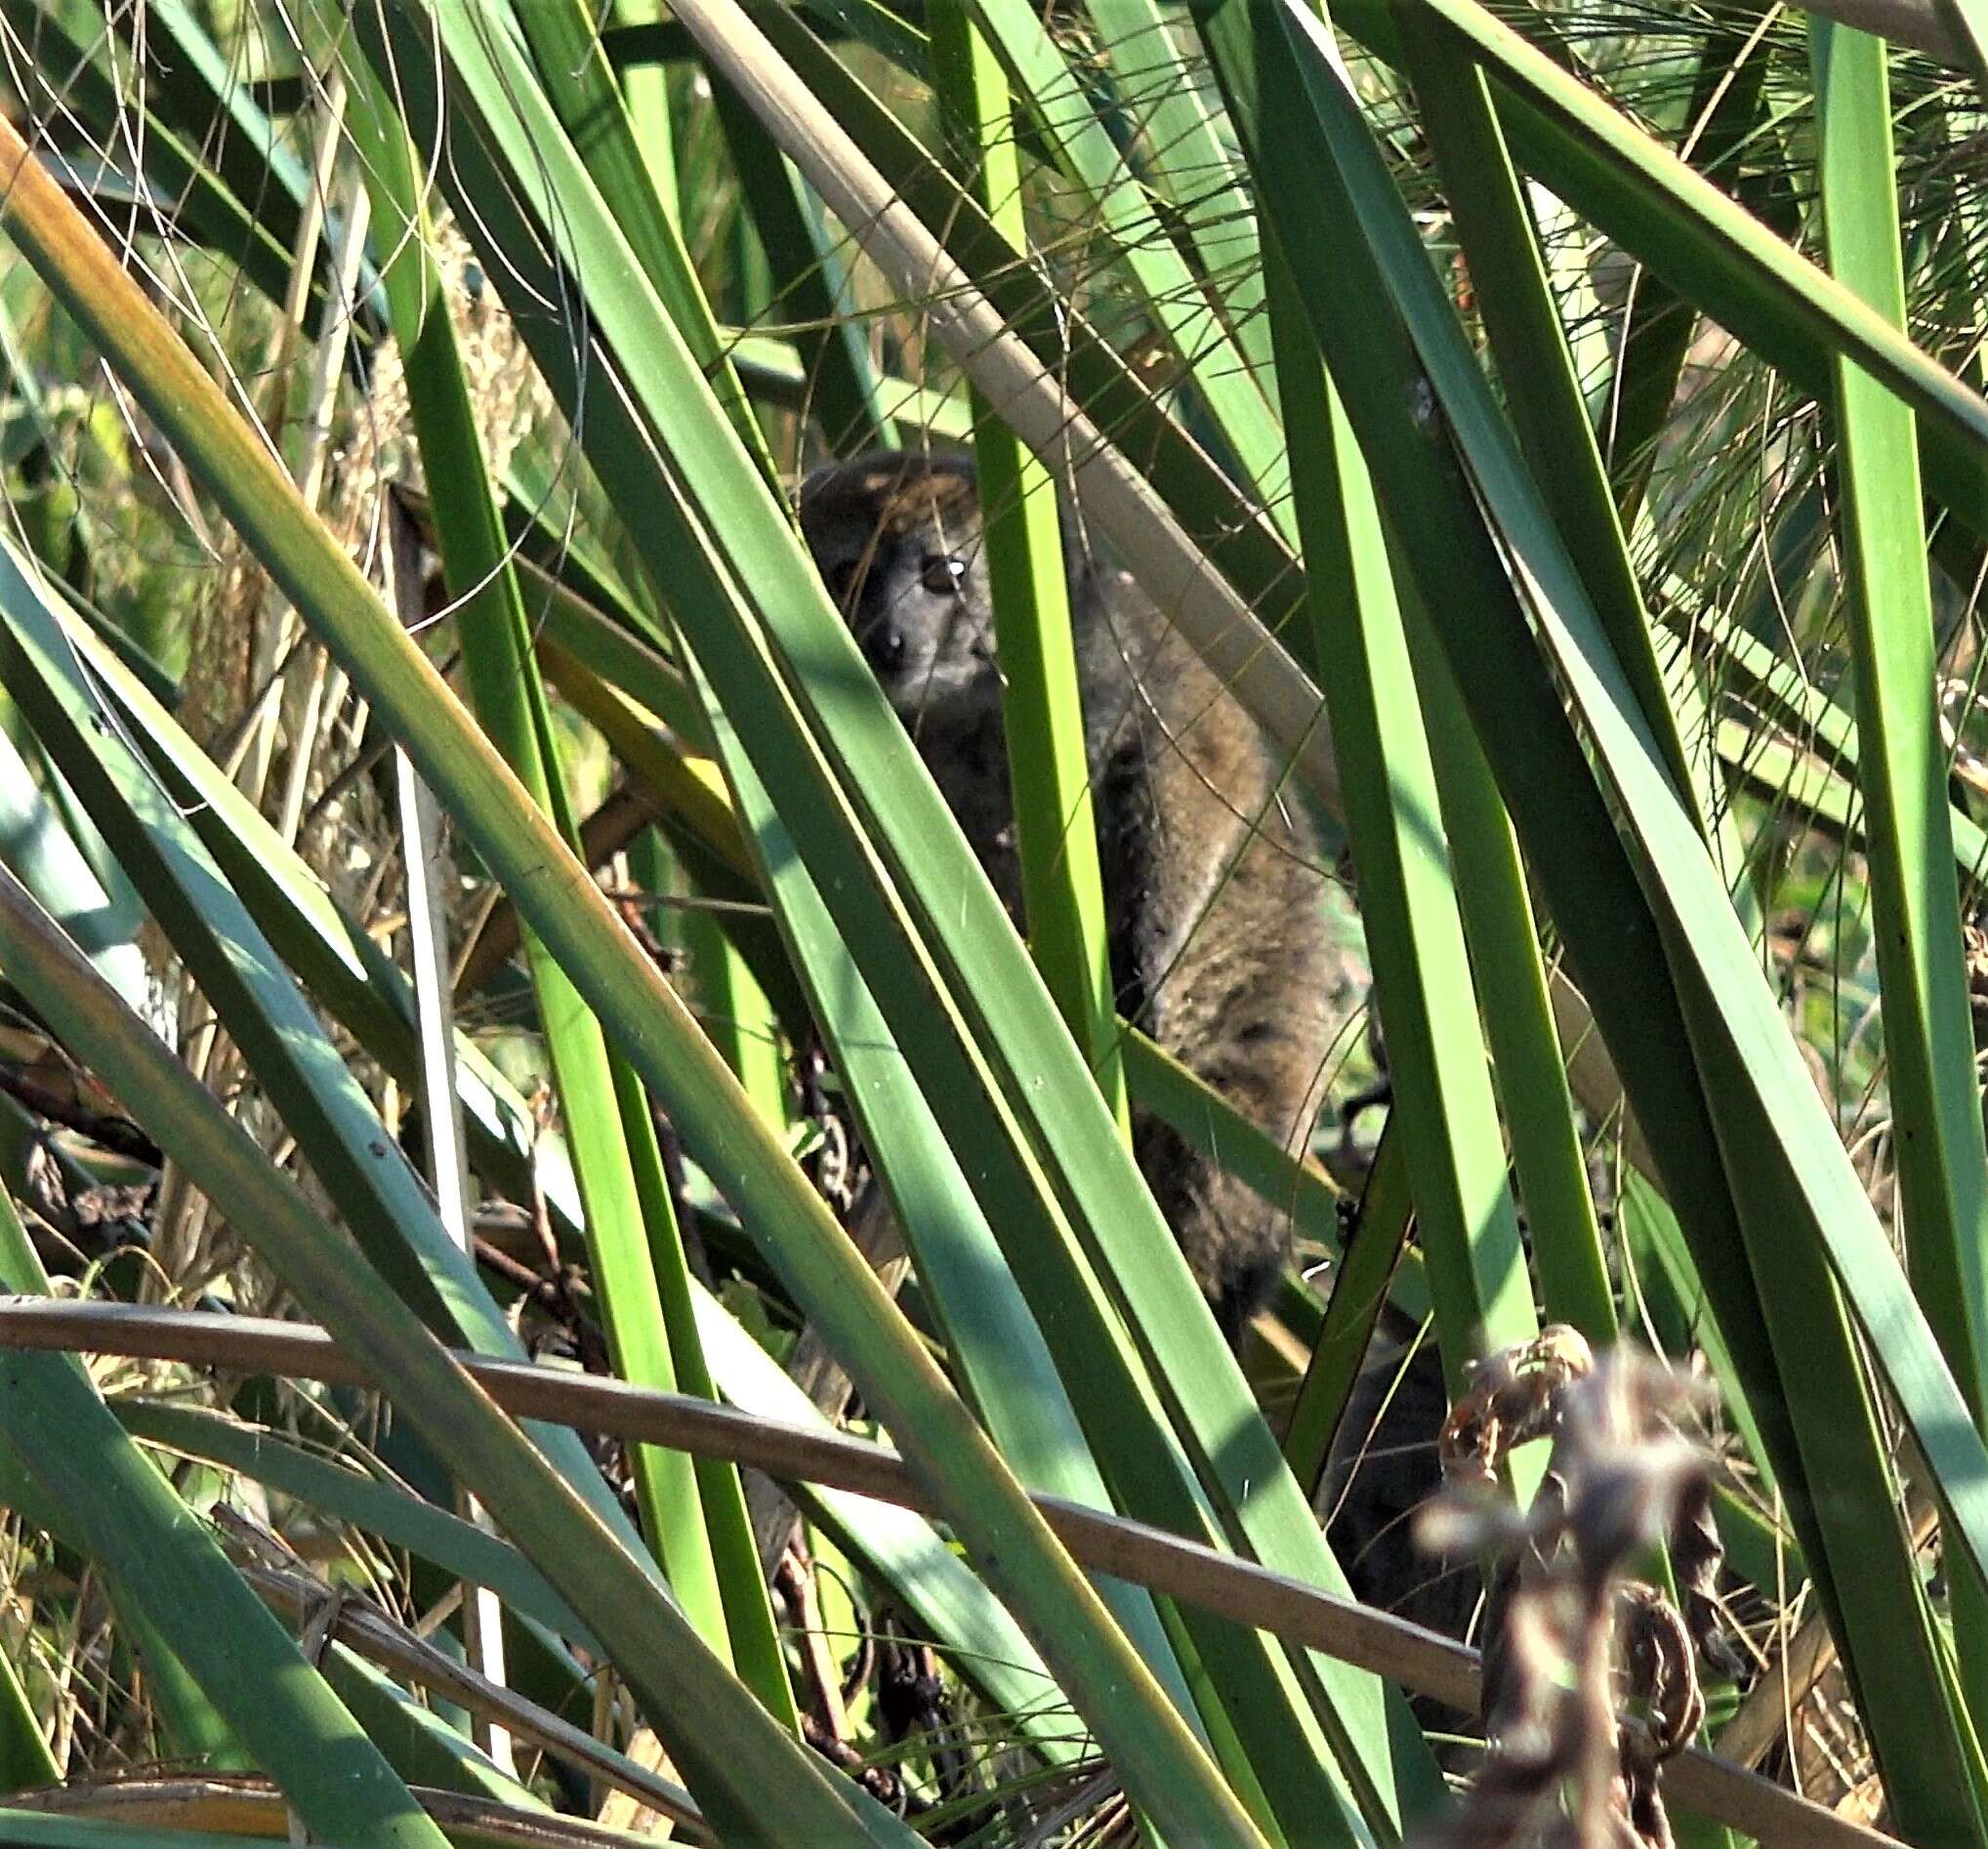 Image of Alaotra Reed Lemur